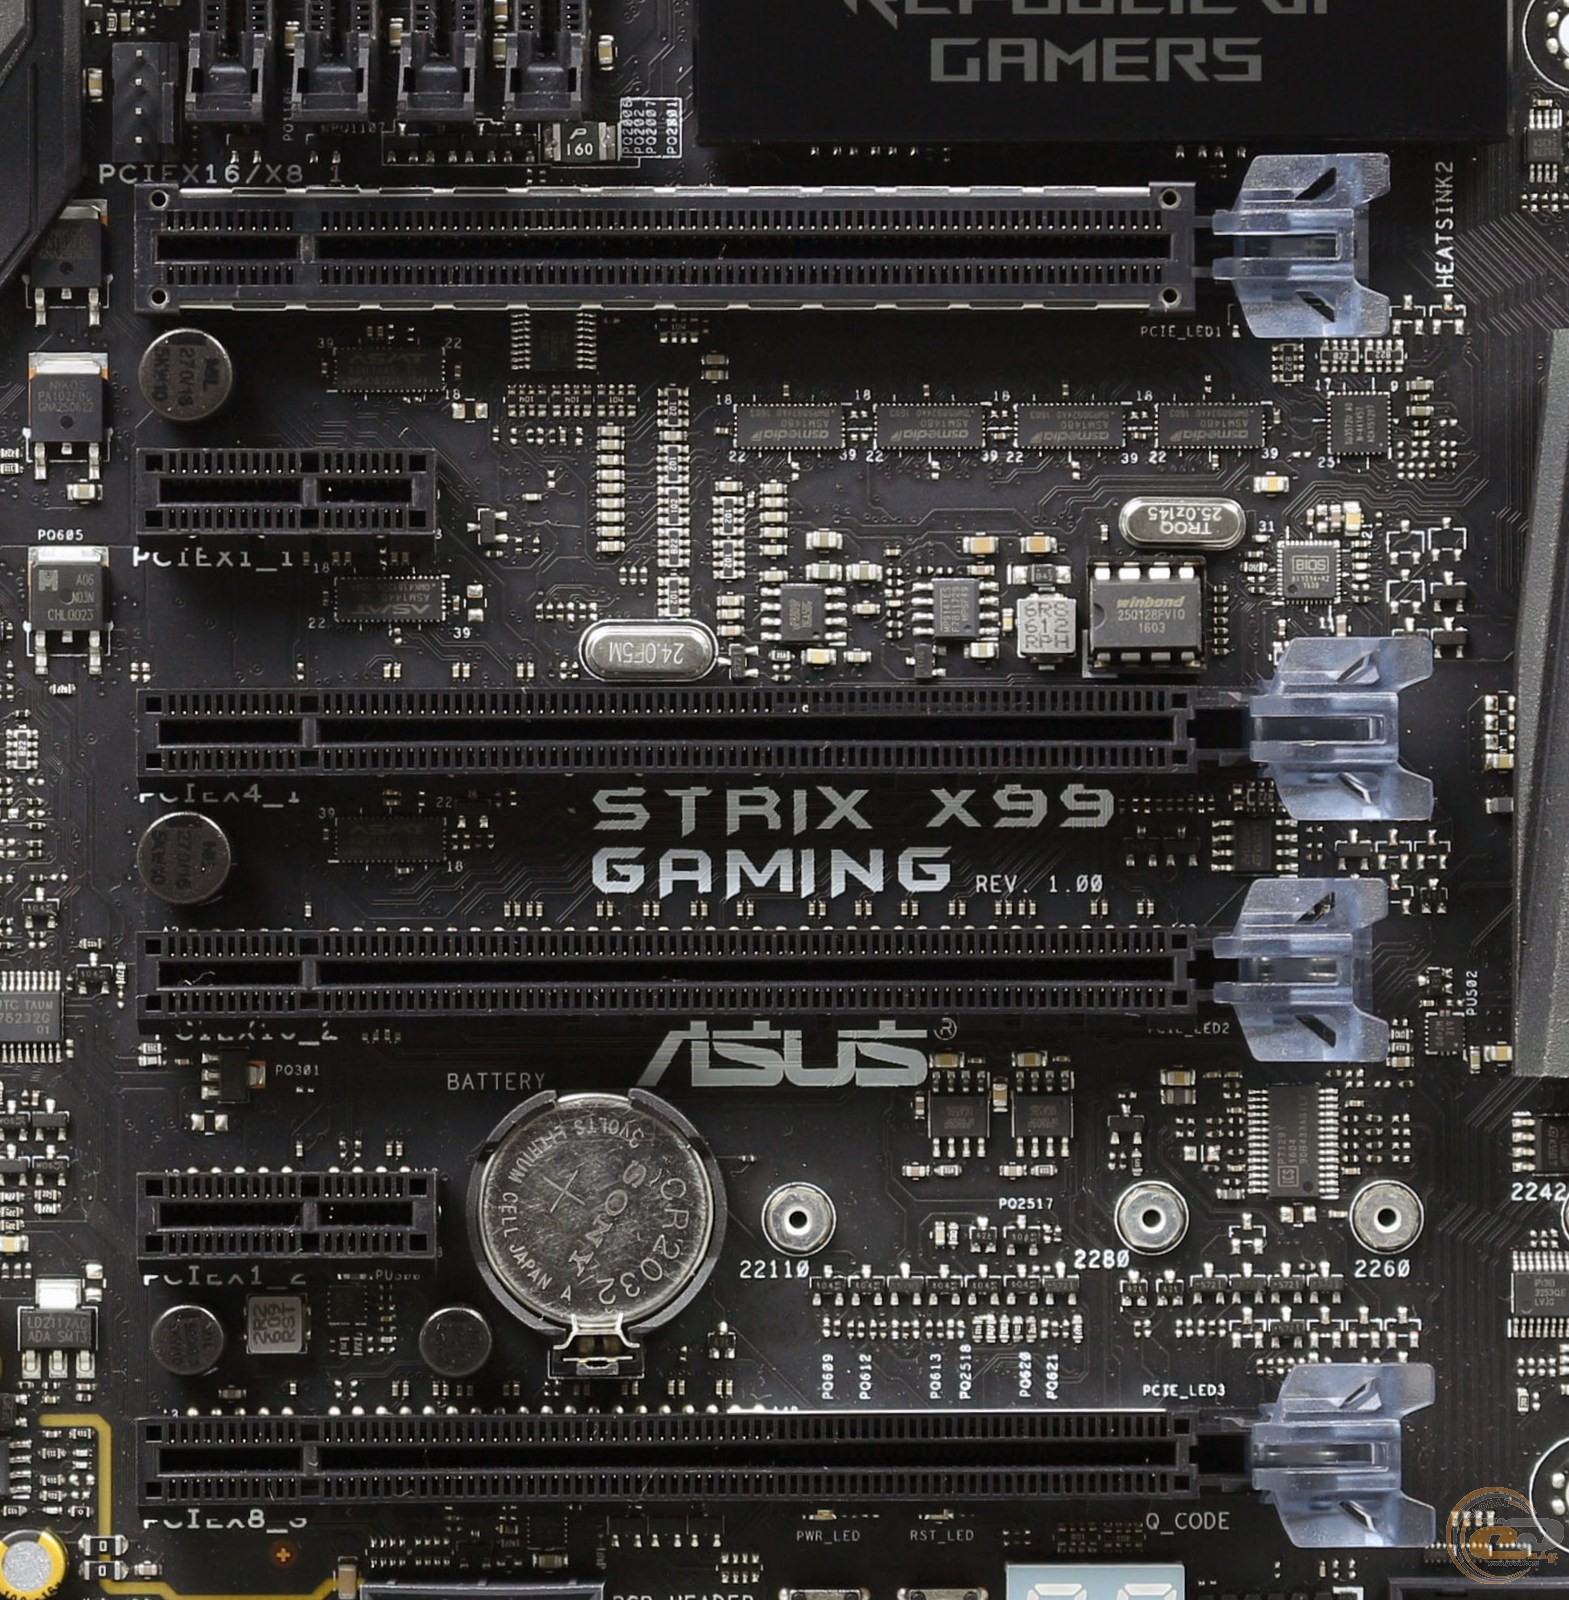 Strix x99 gaming. PWR led на материнской плате что ASUS ROG. ASUS 970 Strix сколько PCI разъем.